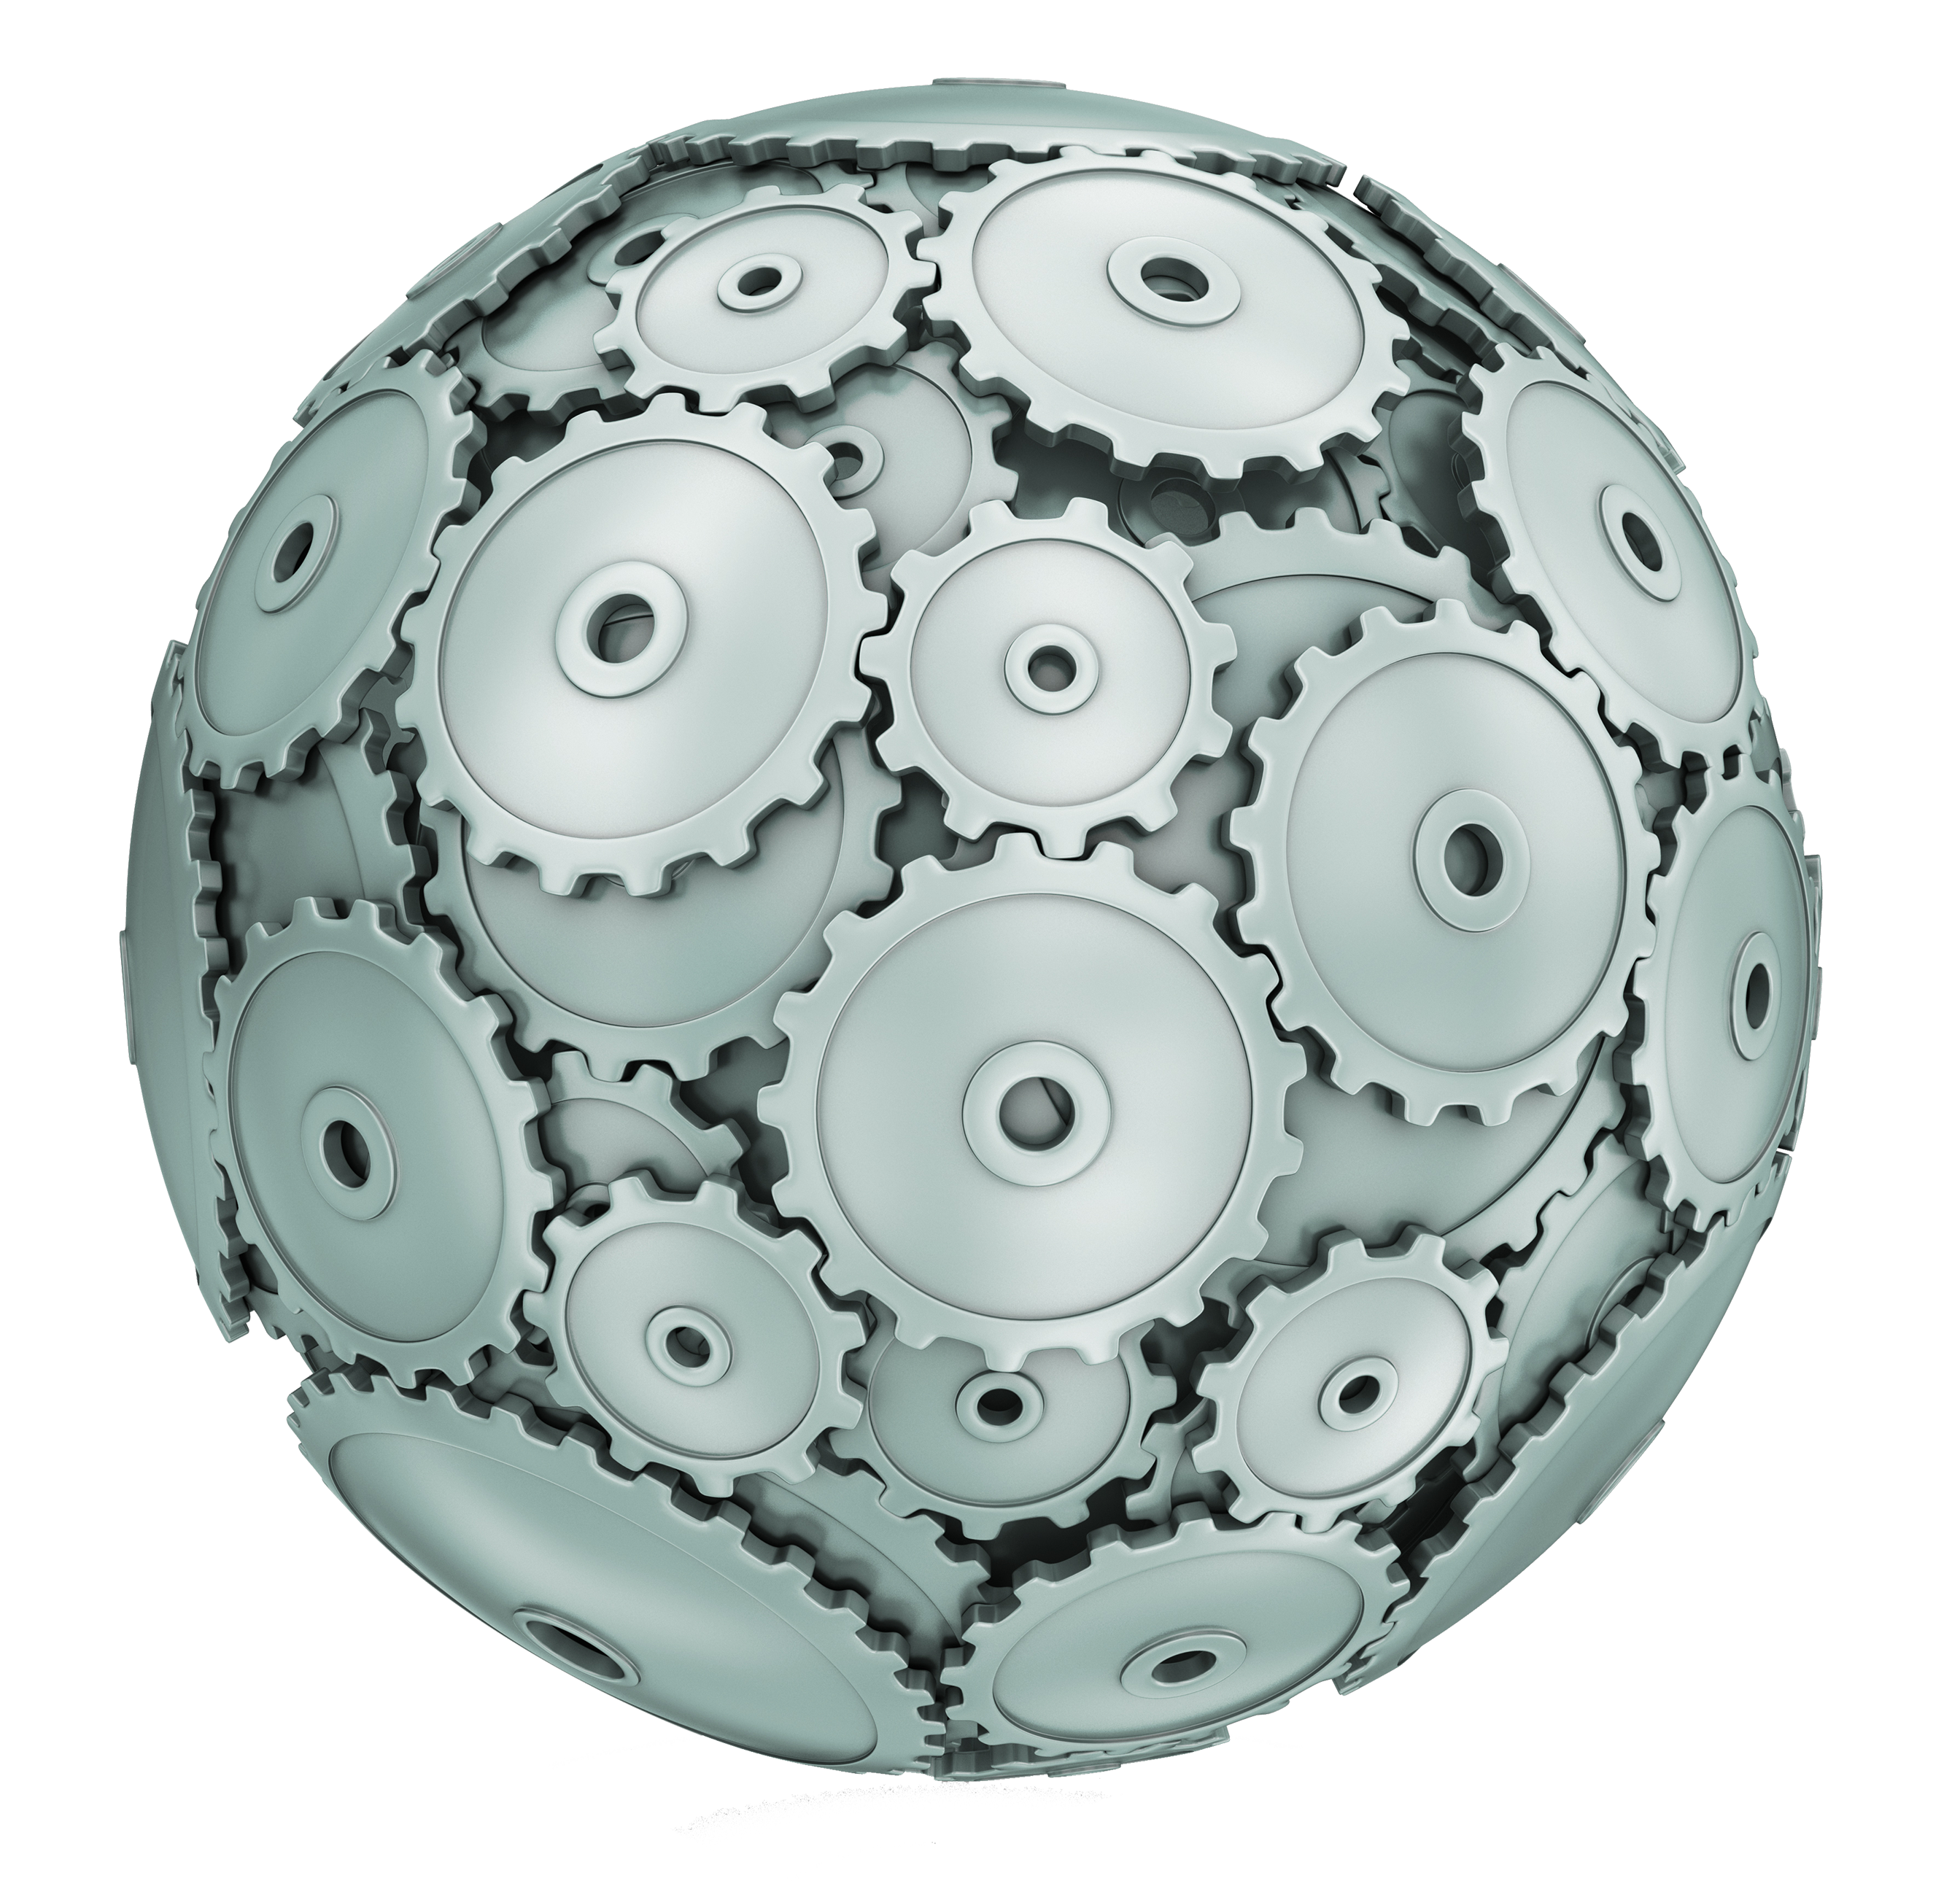 Cog Sphere Graphic